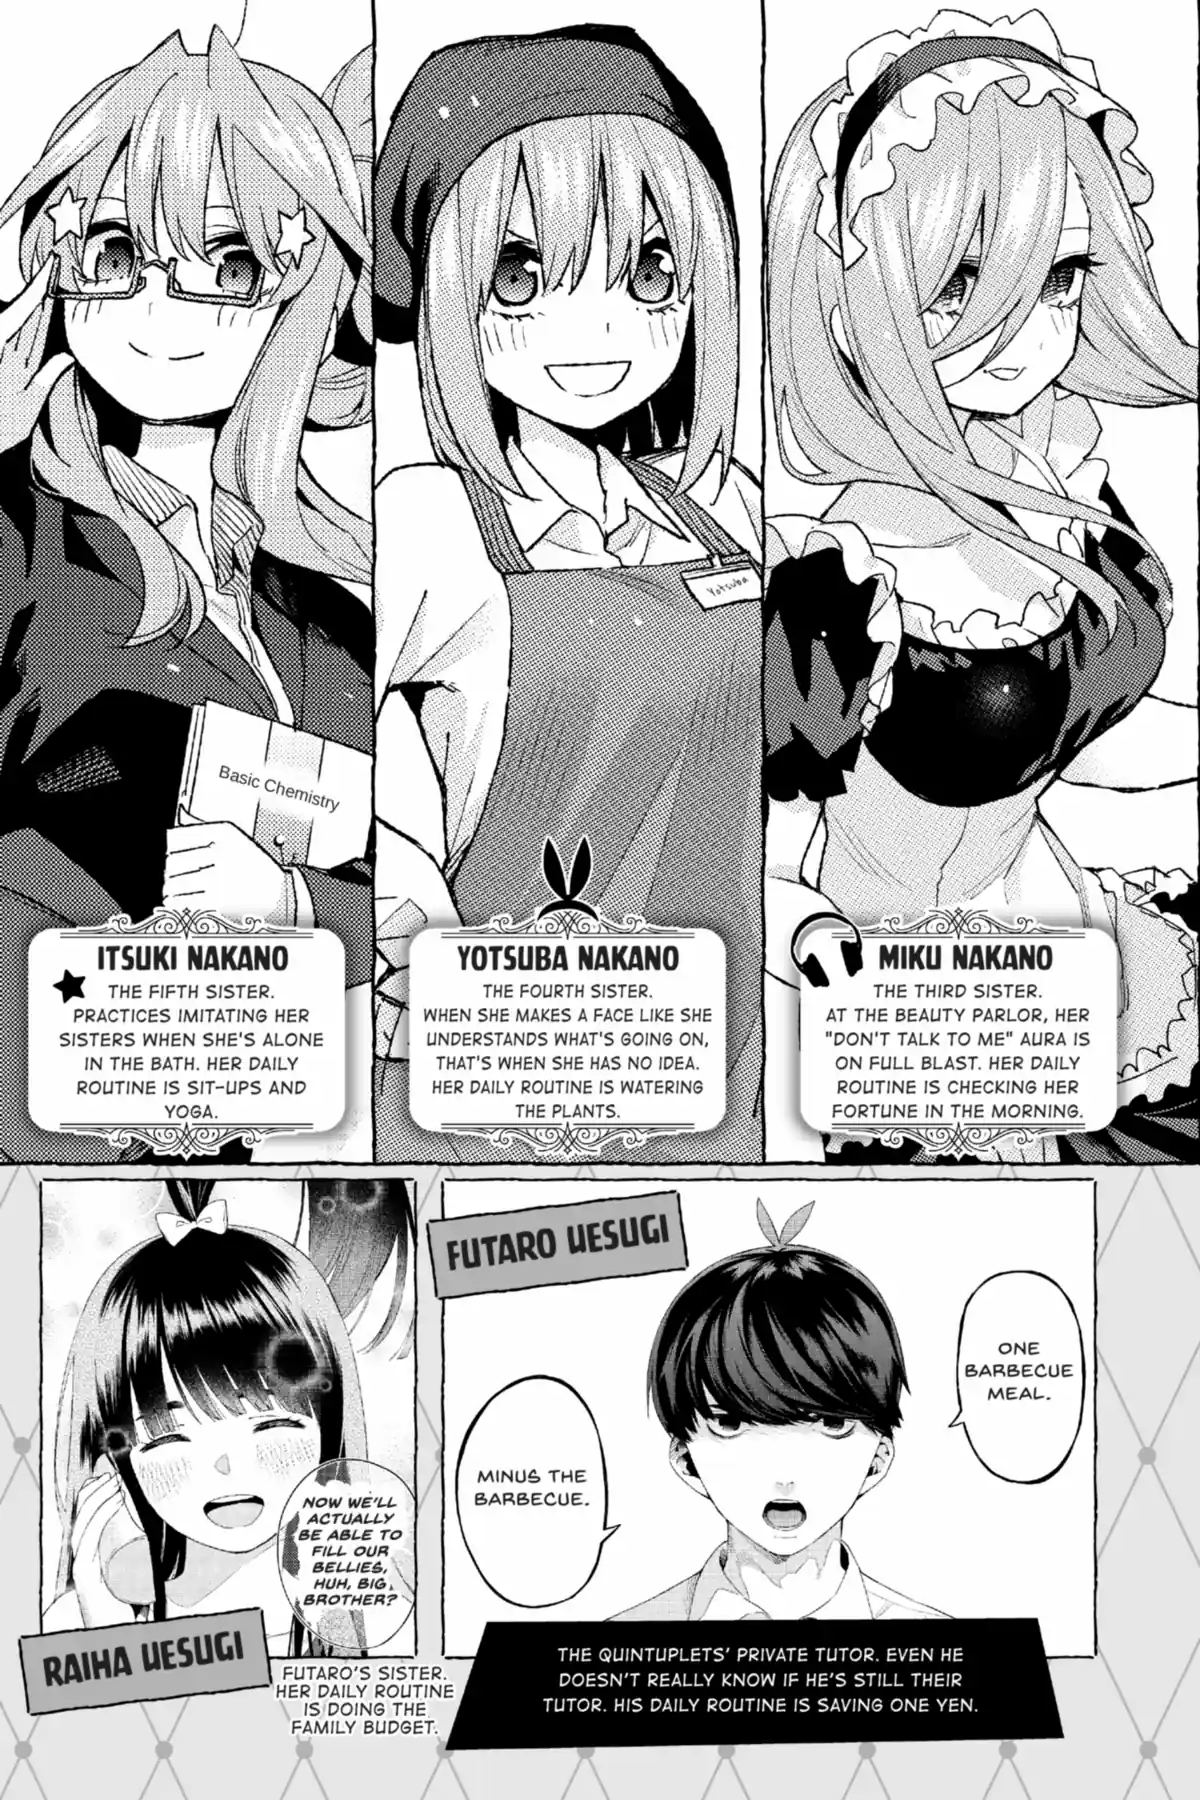 Vol.5 The Quintessential Quintuplets - Manga - Manga news